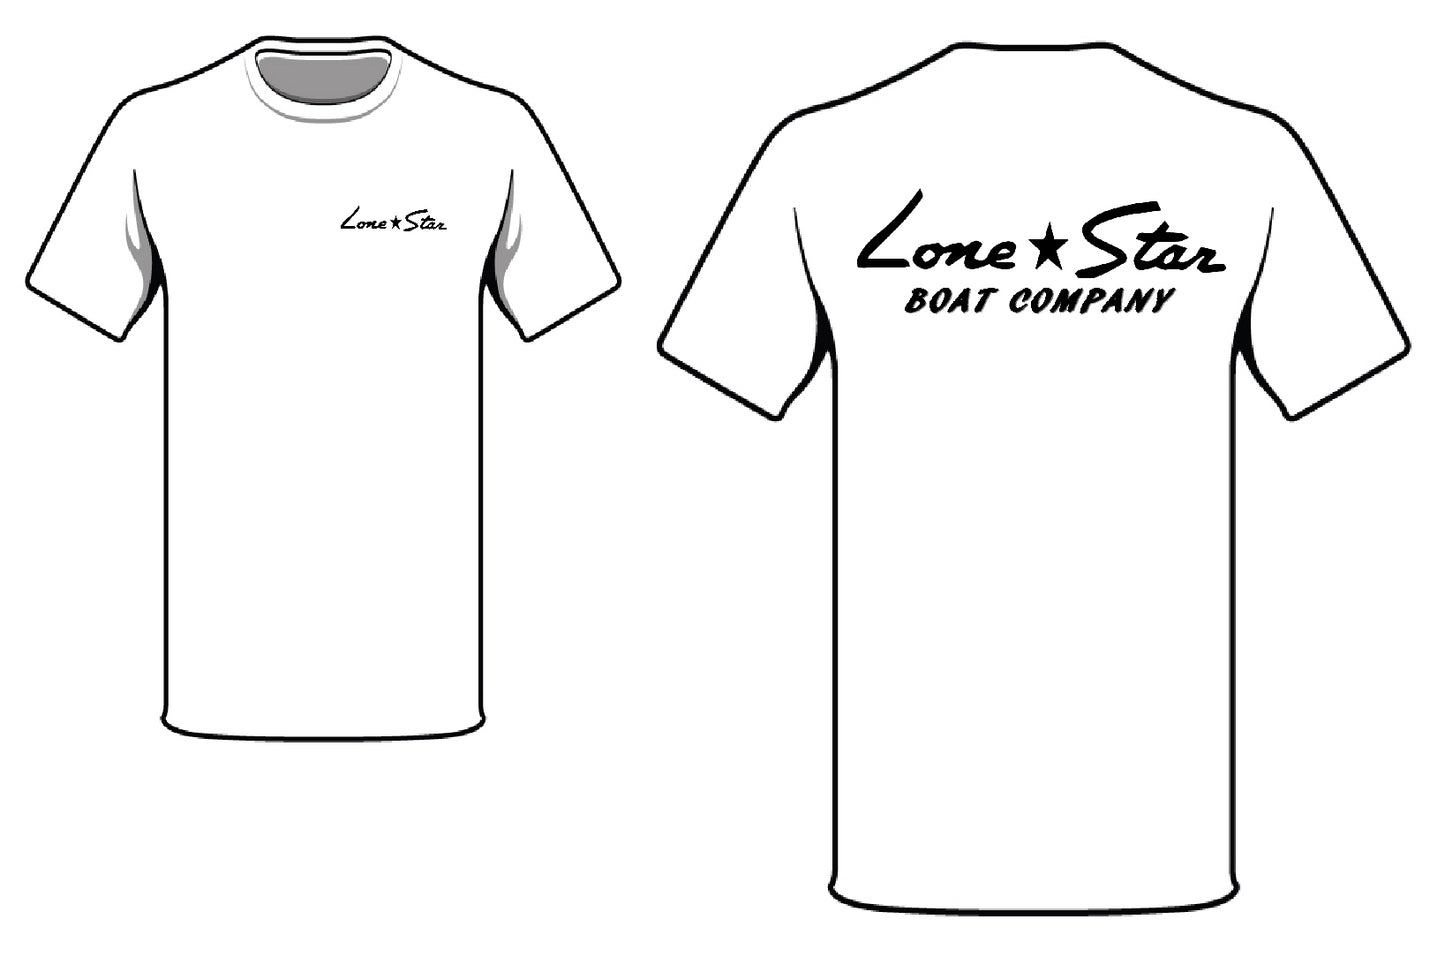 Lone Star Boat Company T-Shirt